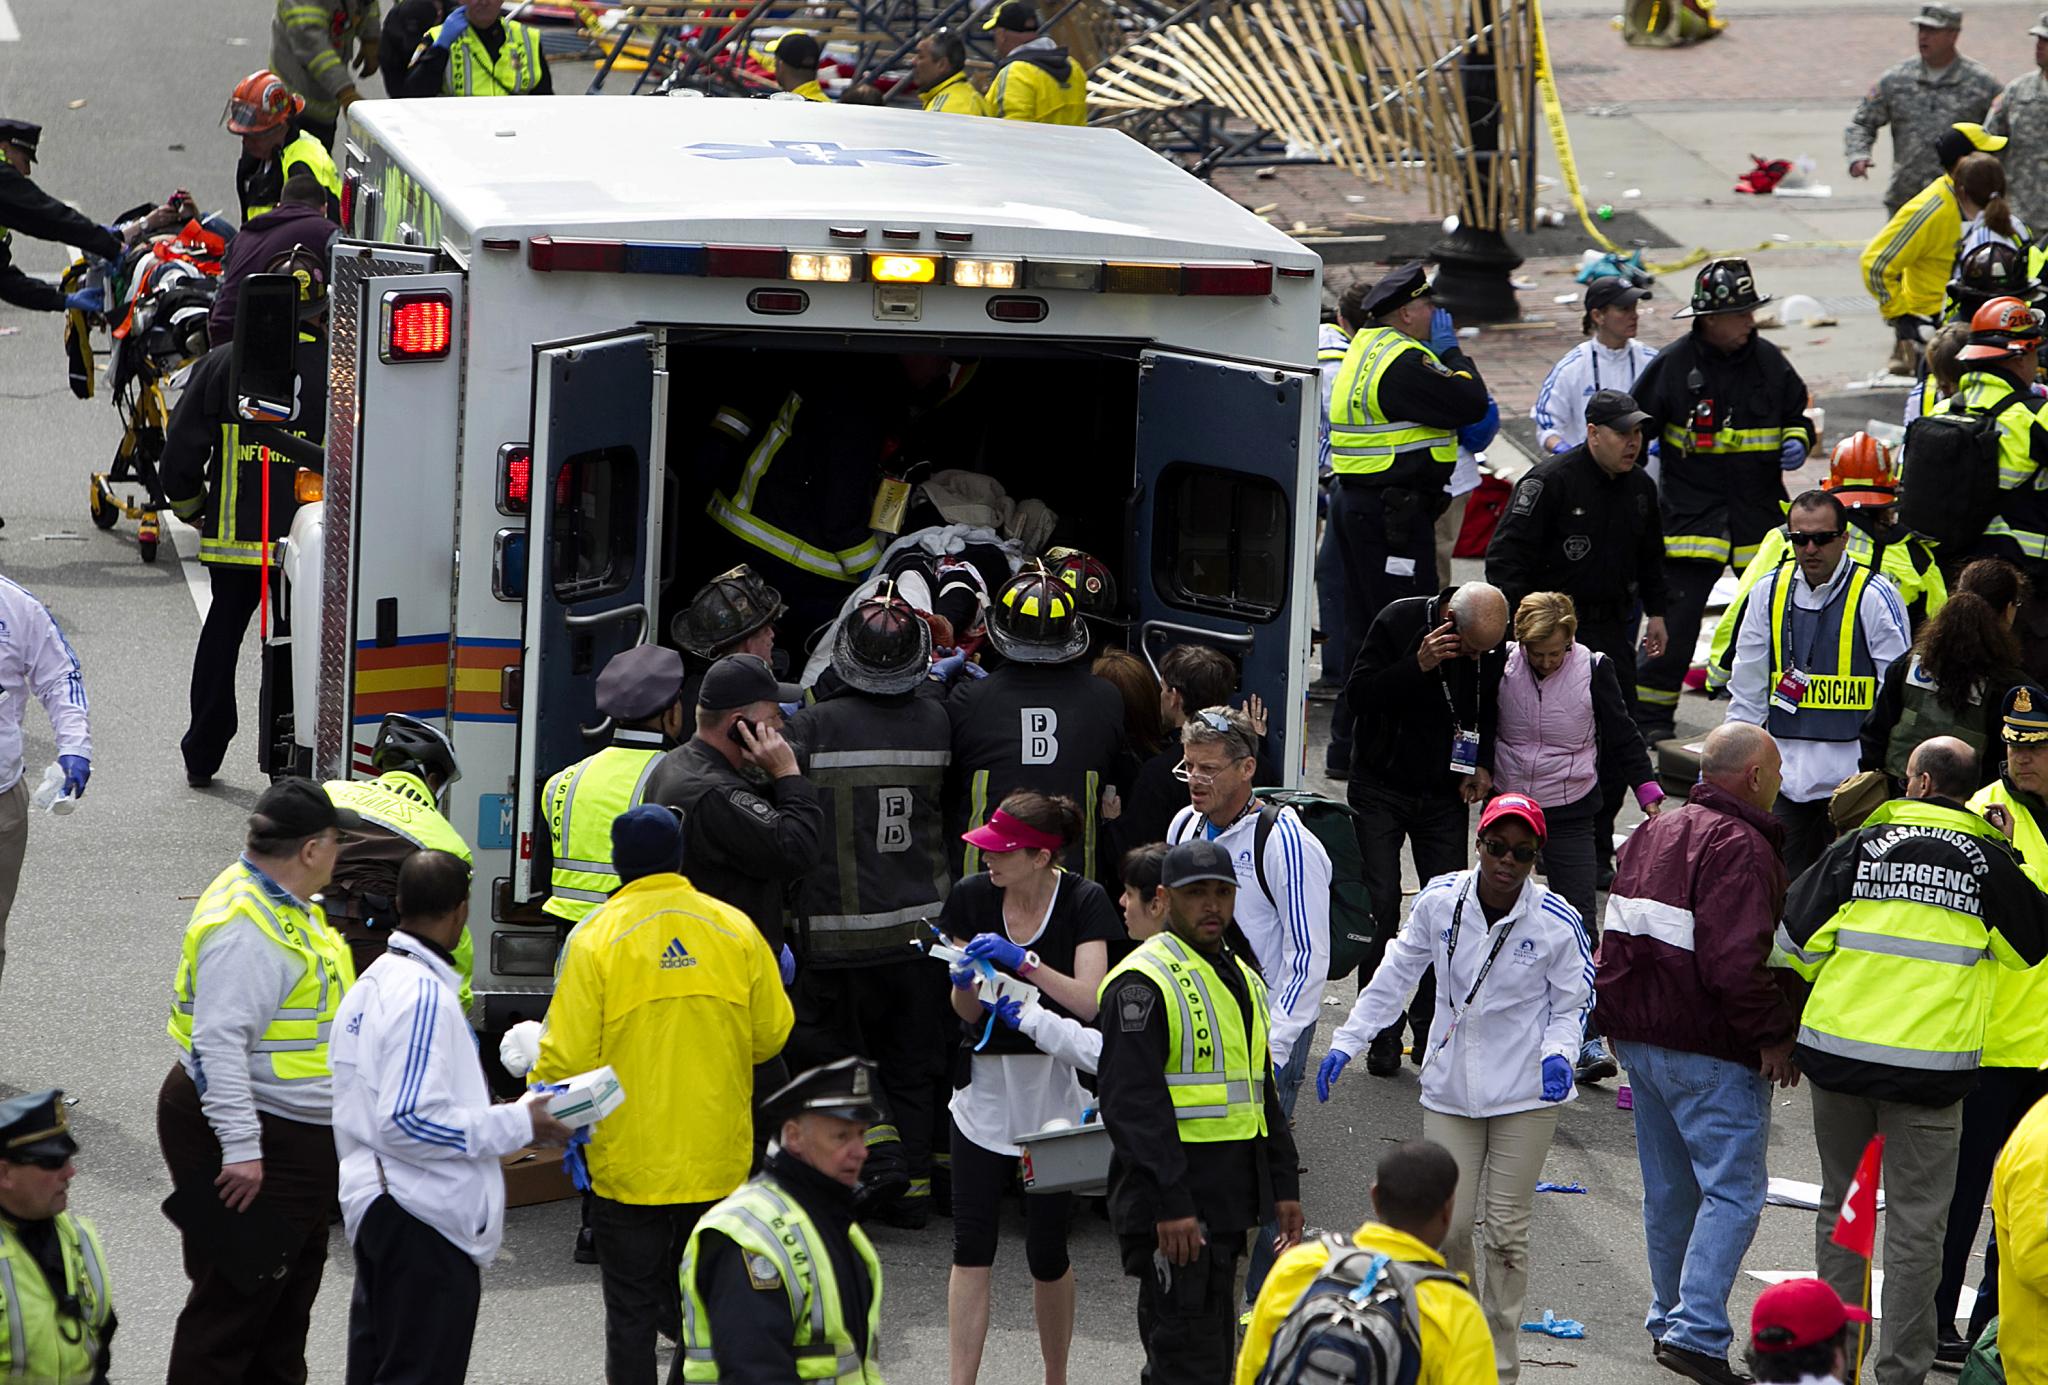 Do the Boston Bombings Make You Afraid?